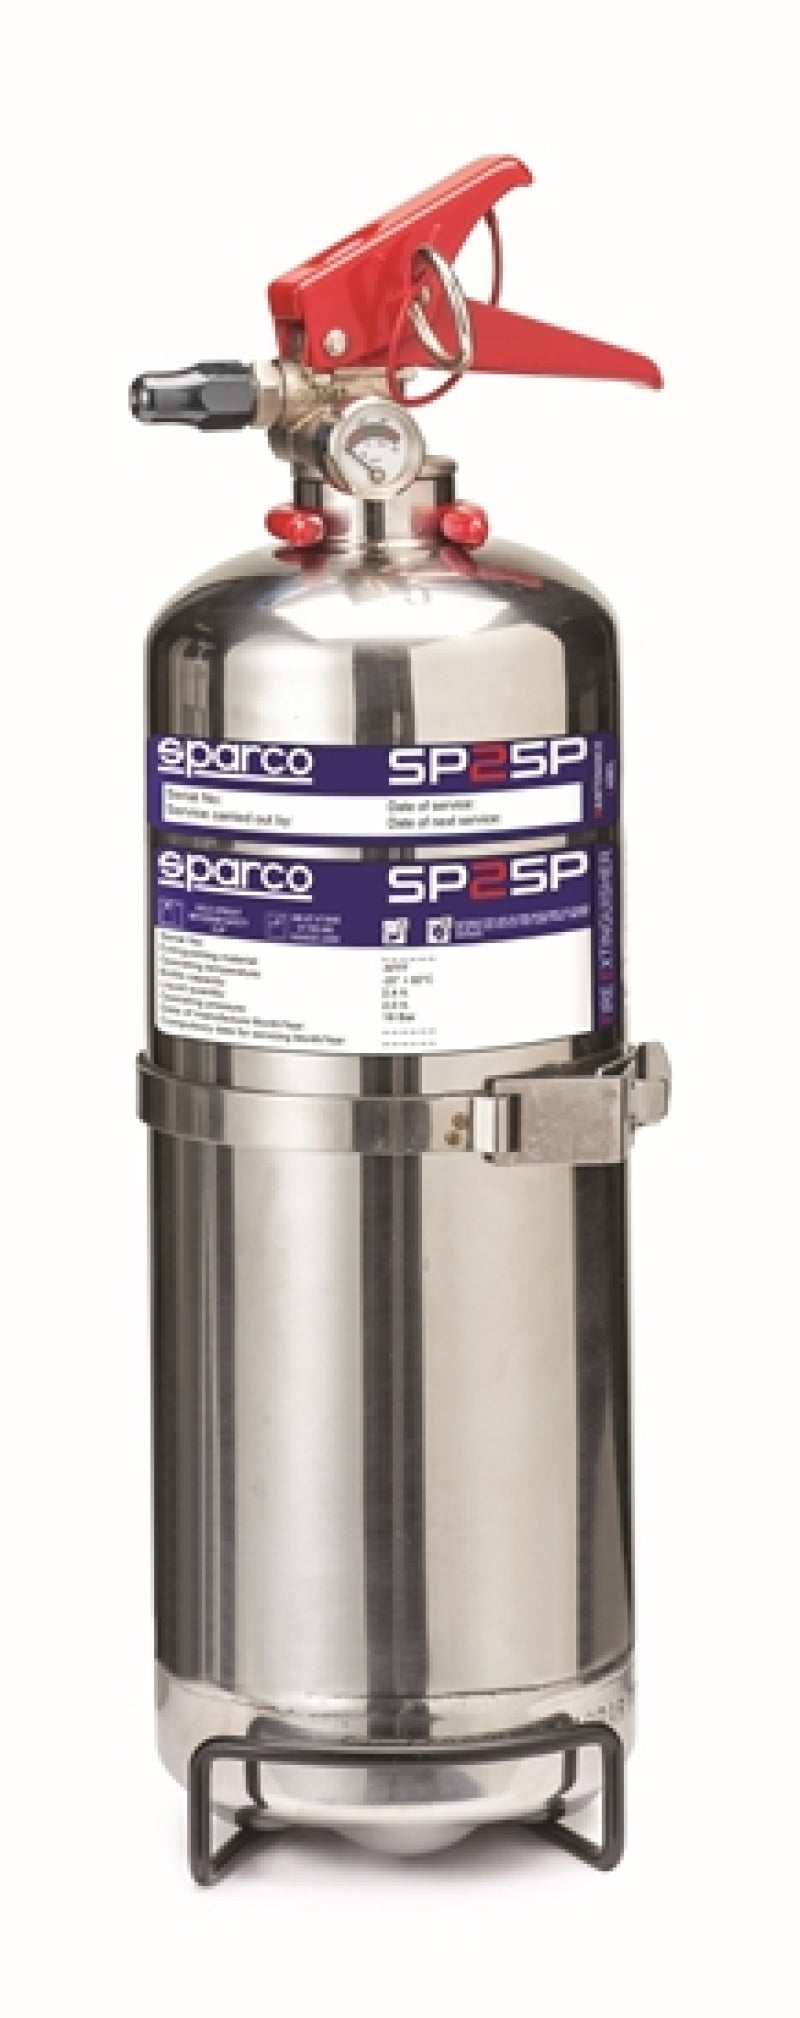 Extintor de acero portátil Sparco de 2 litros